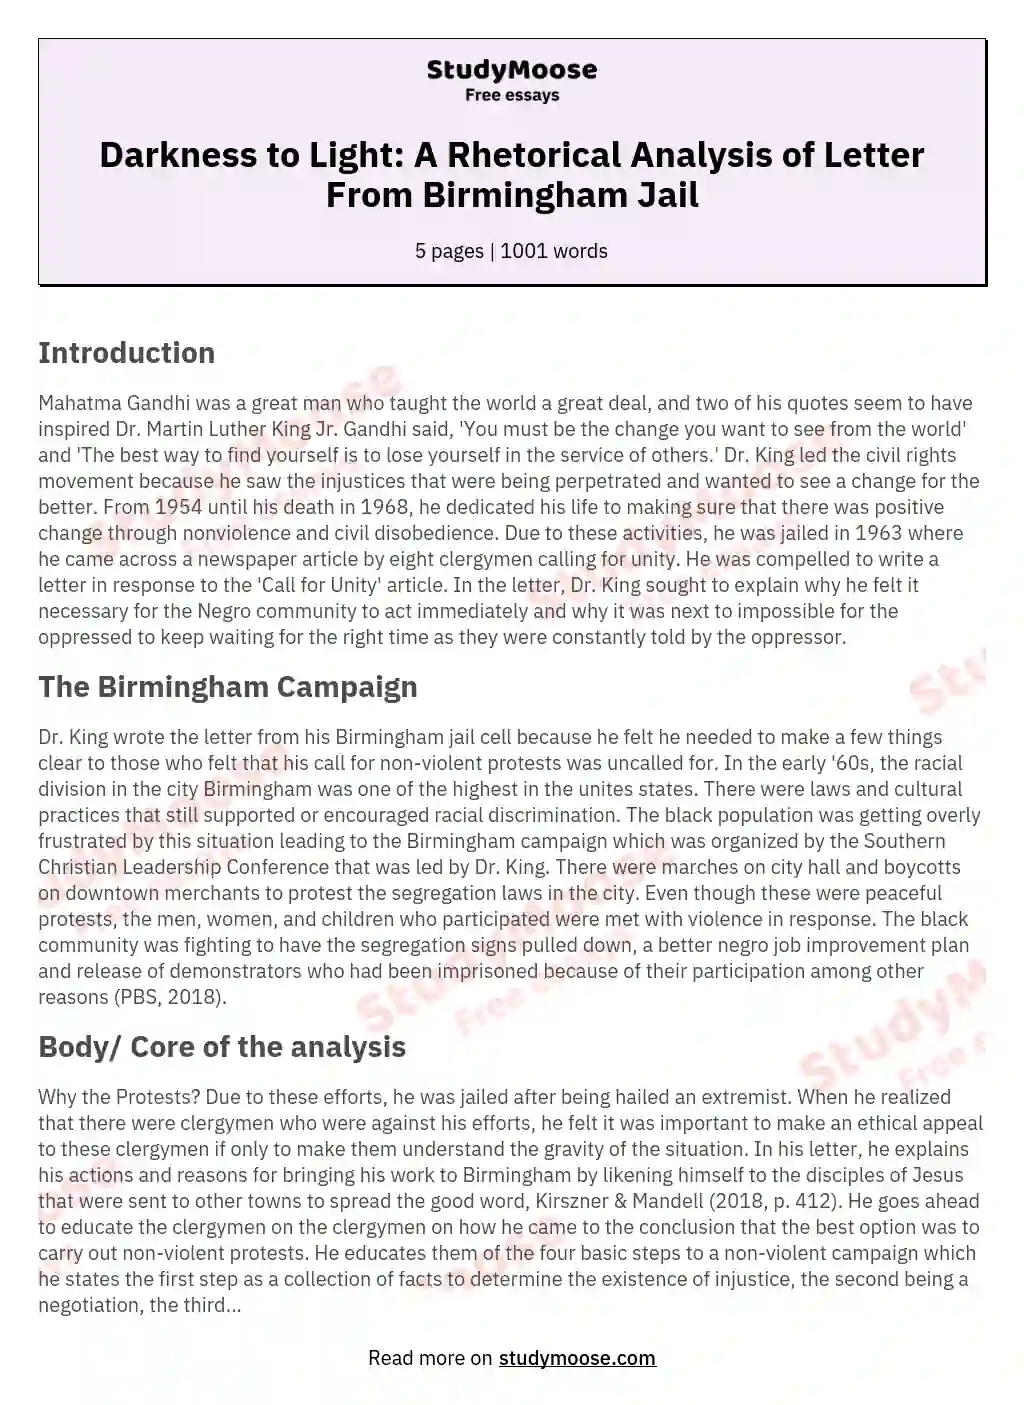 rhetorical analysis essay example letter from birmingham jail